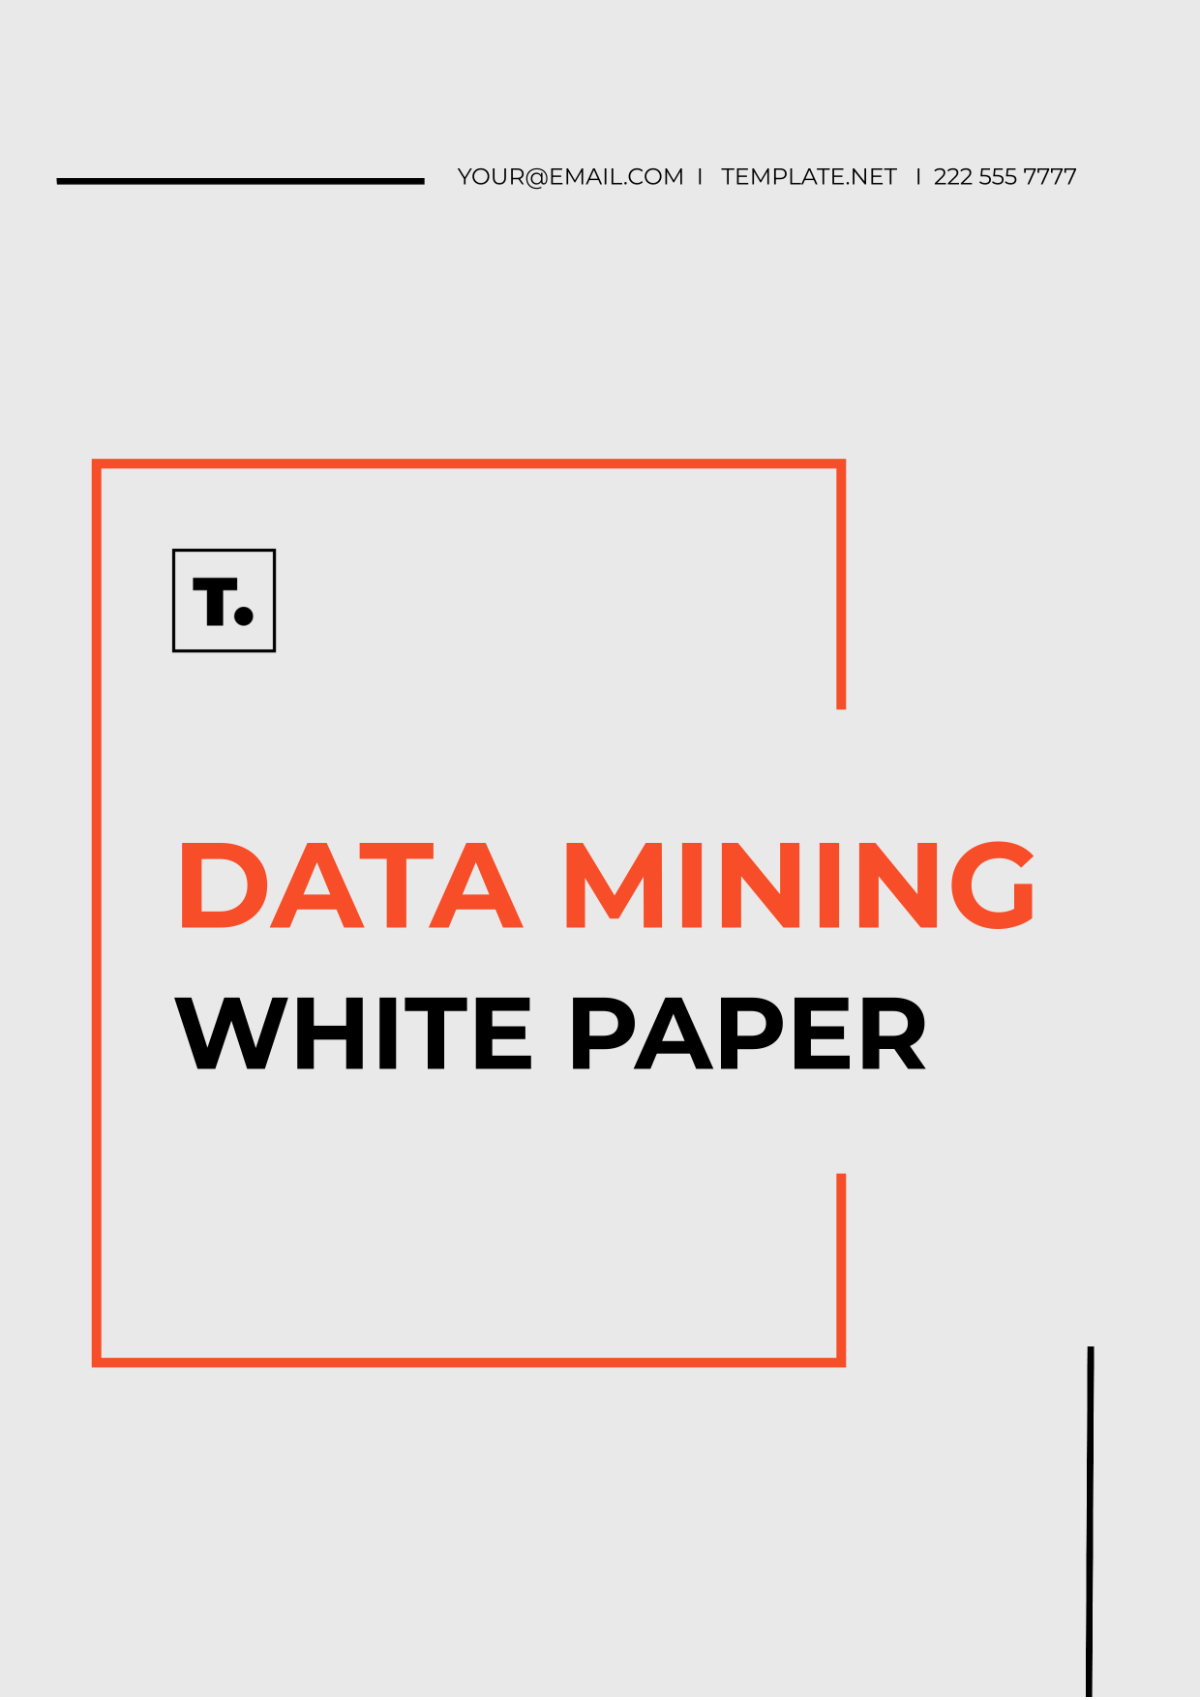 Data Mining White Paper Template